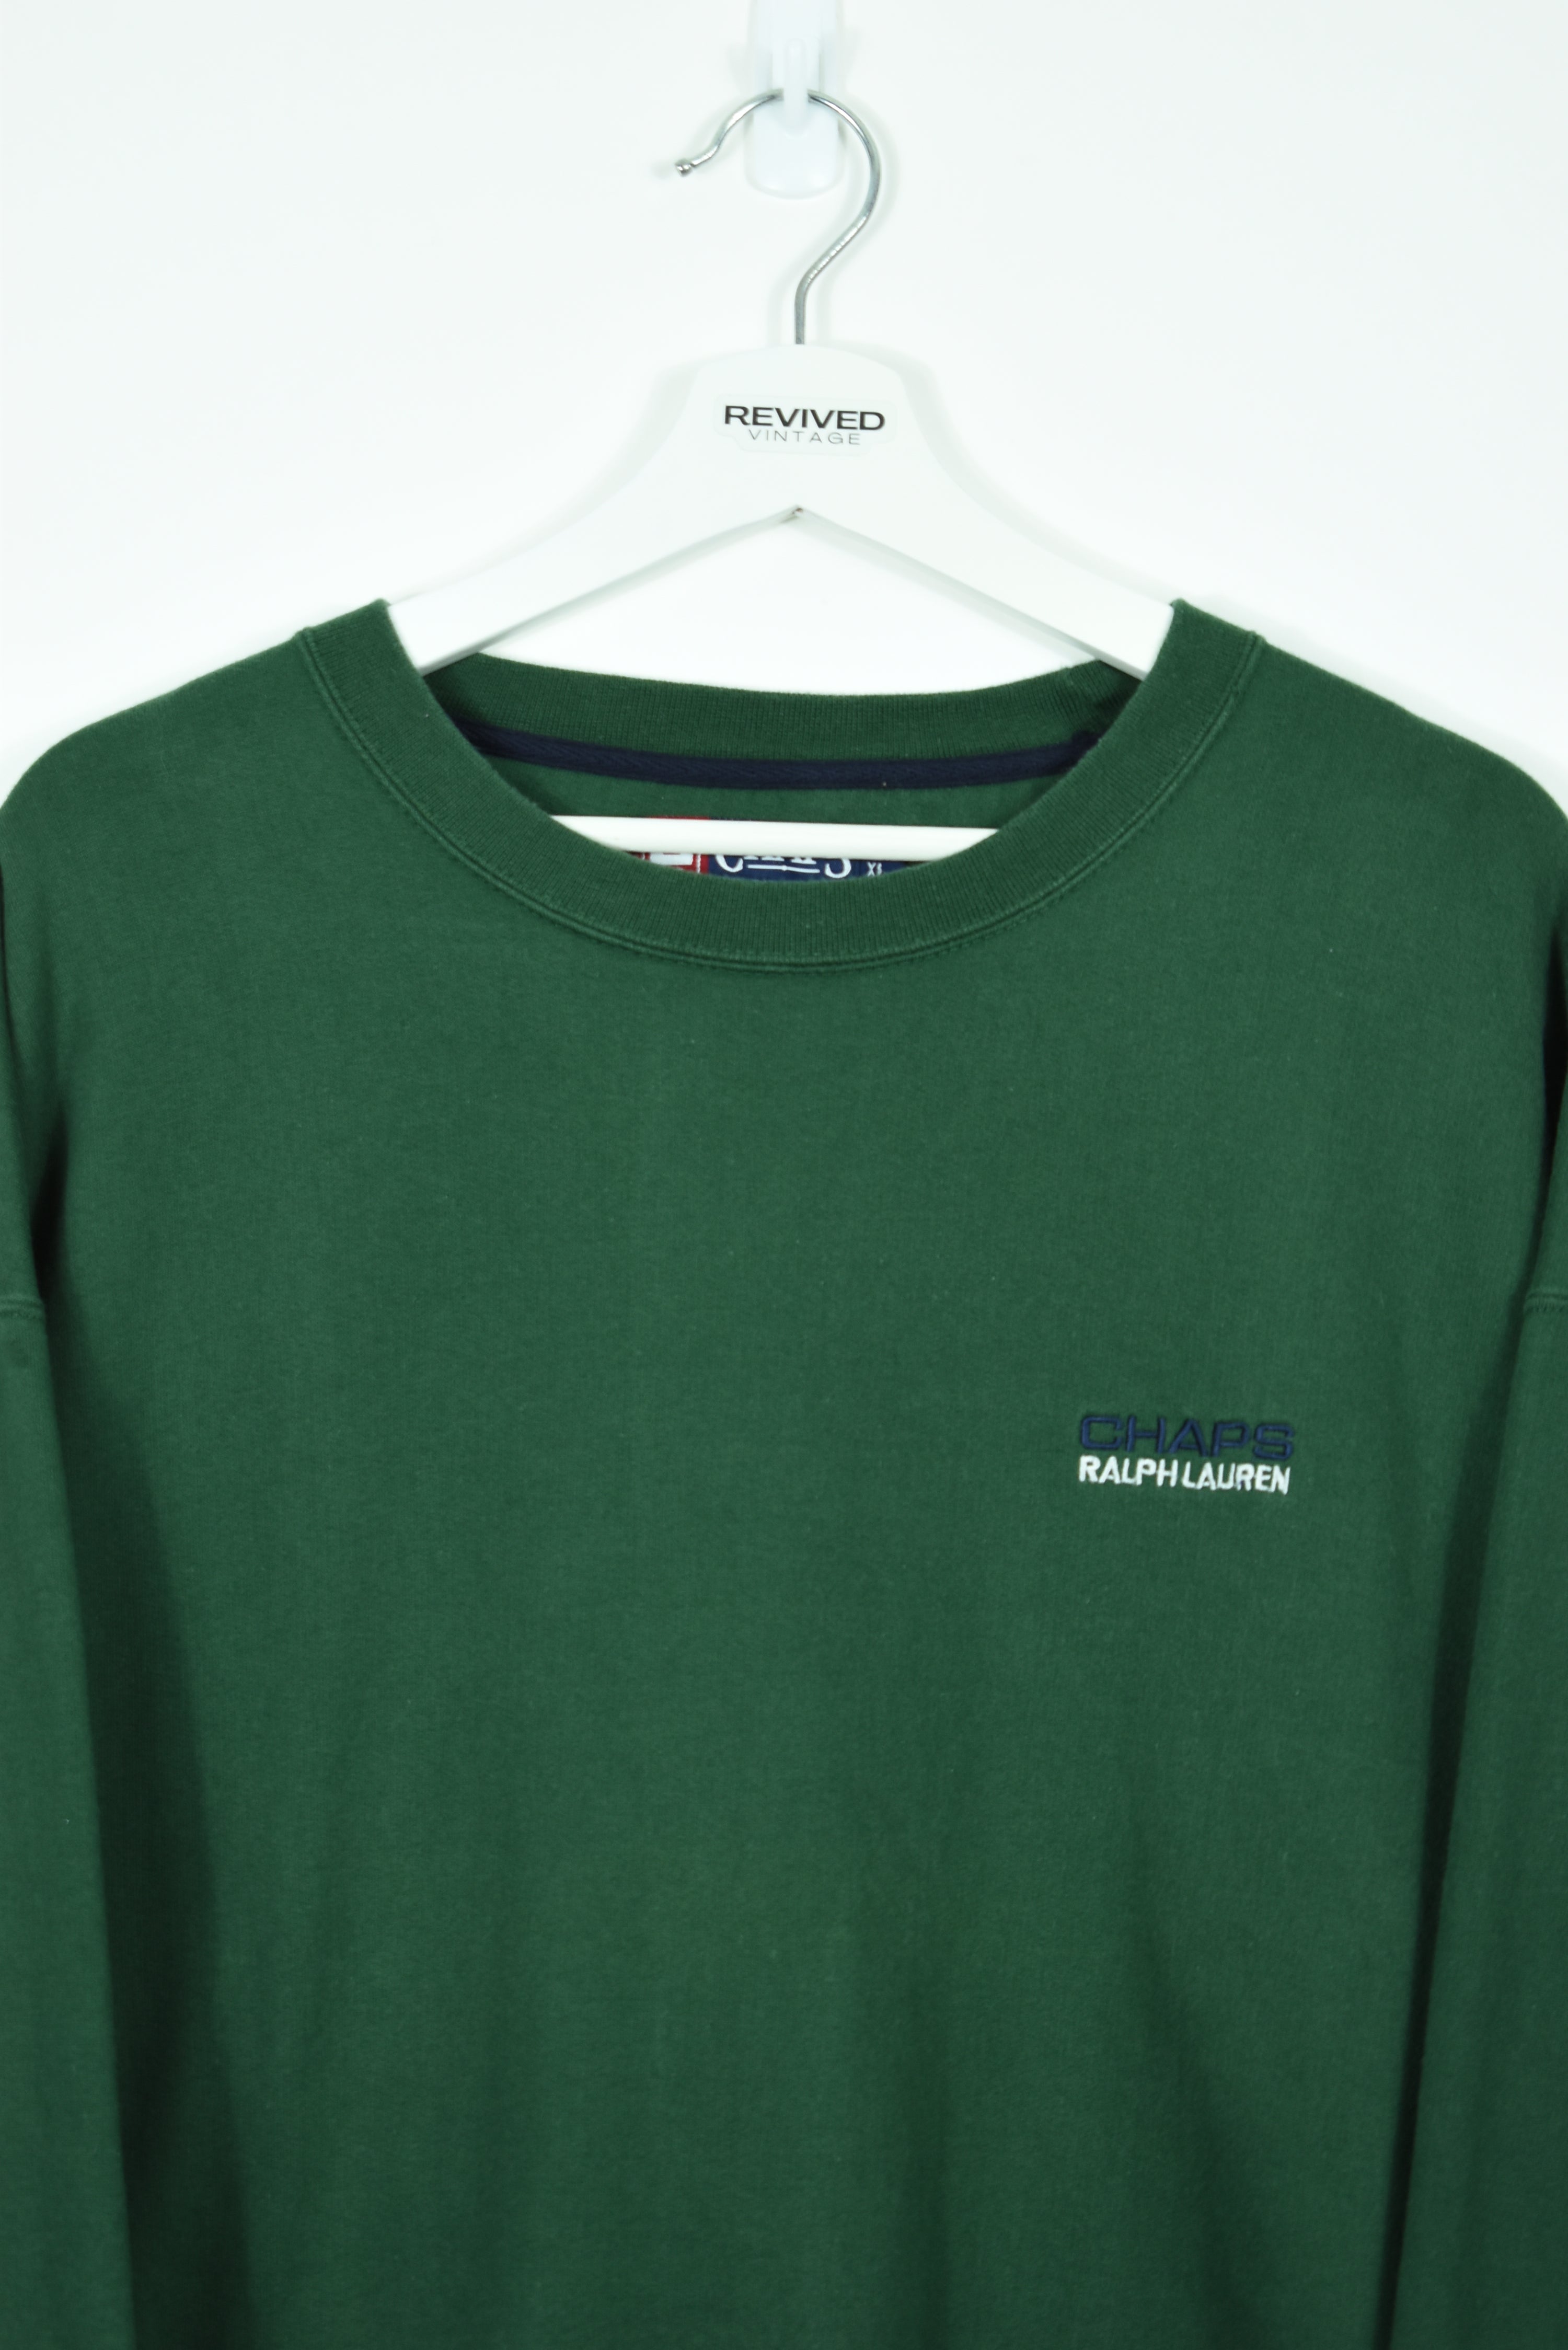 Vintage Chaps Ralph Lauren Embroidery Forrest Green Sweatshirt Xlarge